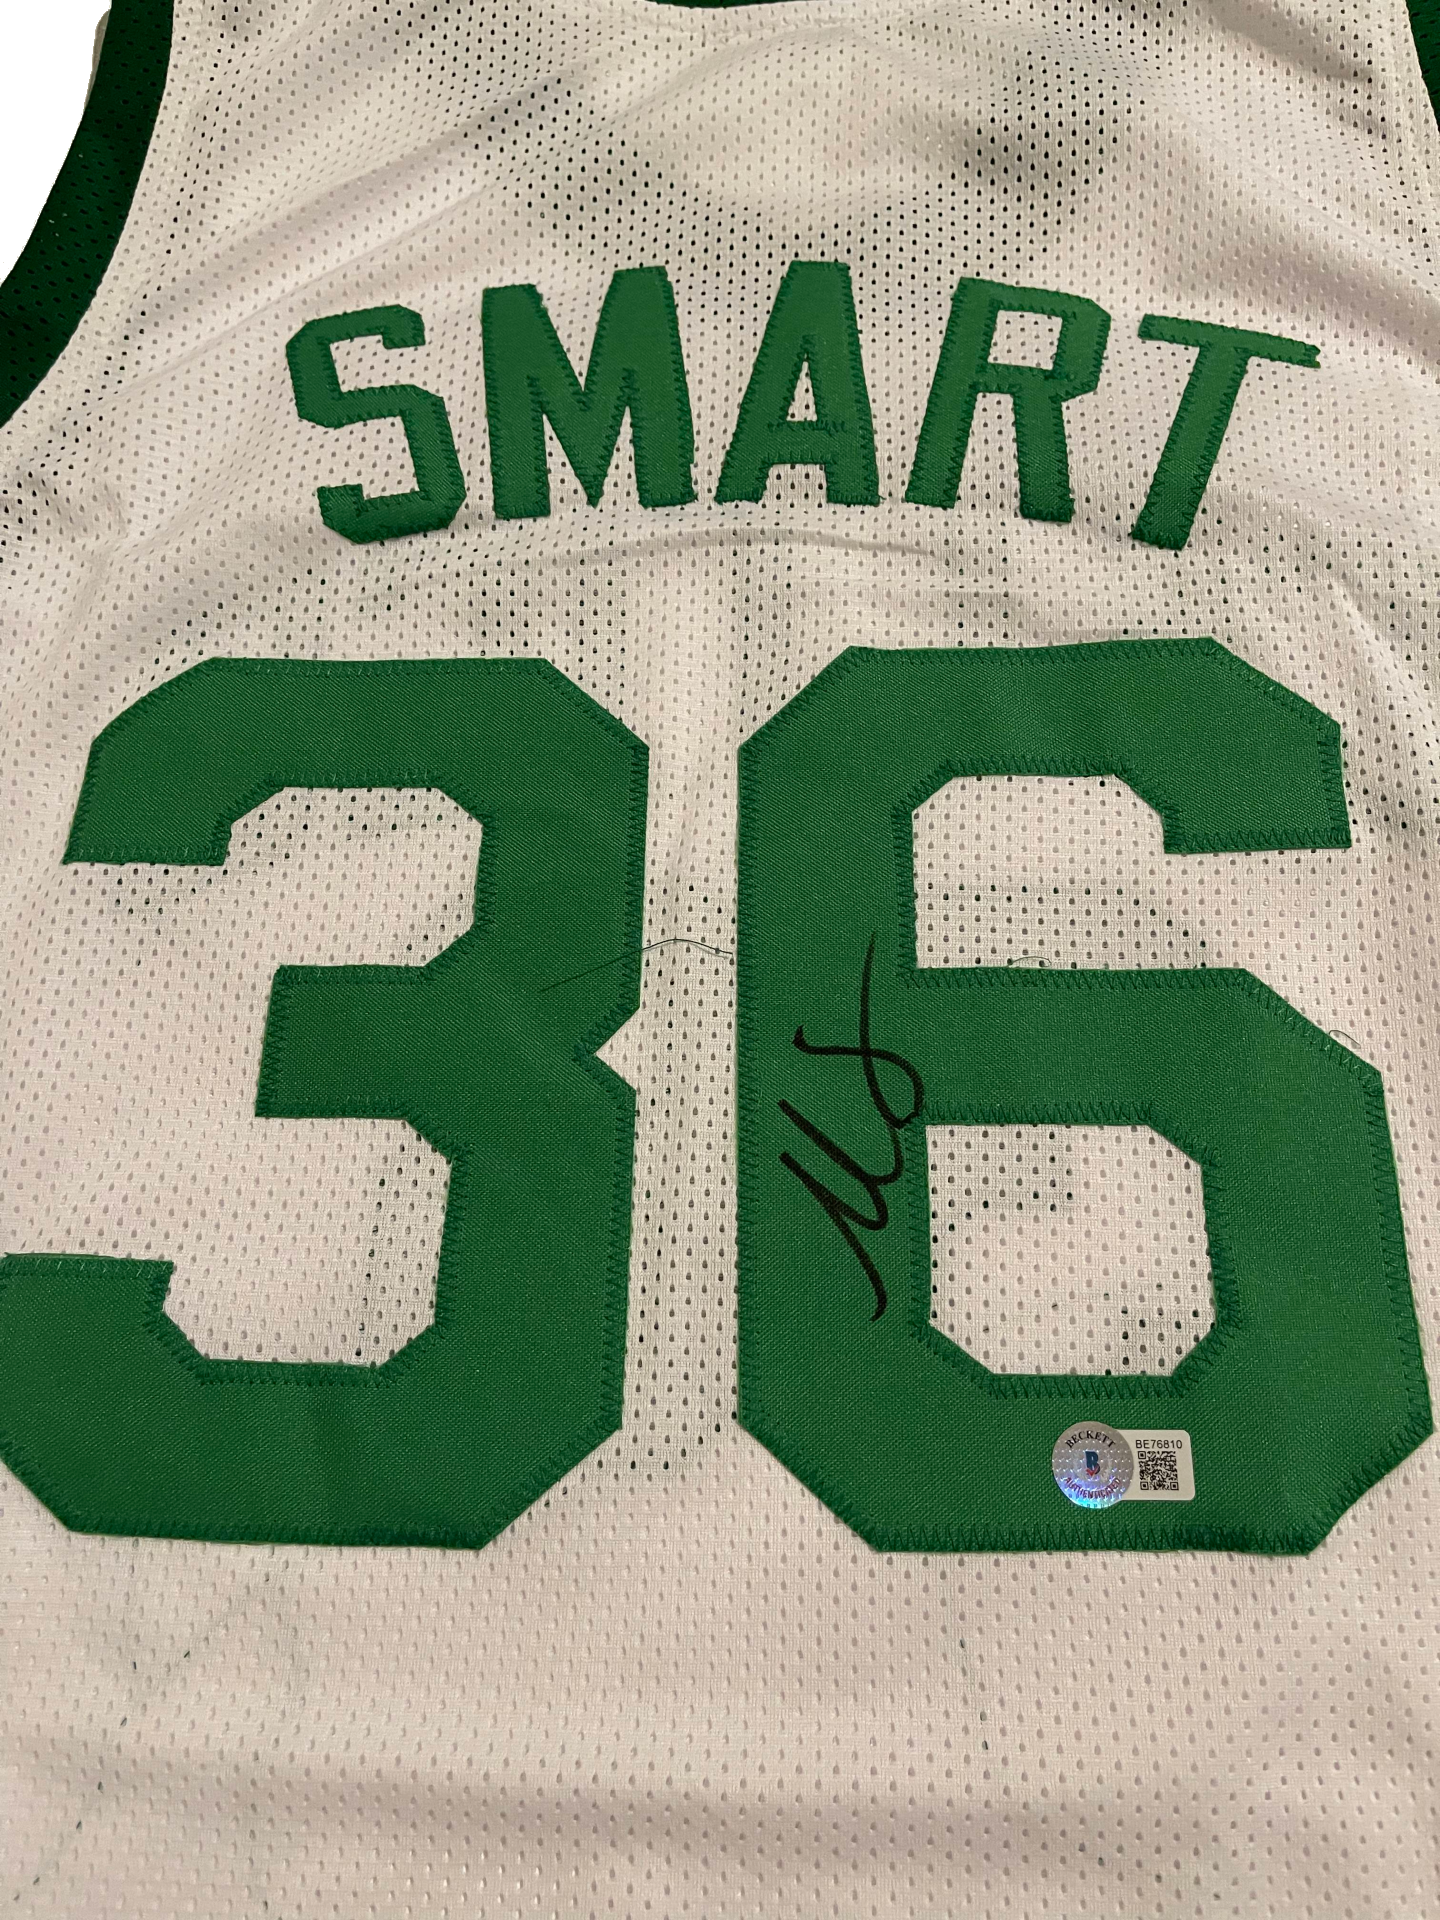 Marcus Smart Boston Celtics Fanatics Authentic Autographed Green Nike  Swingman Jersey